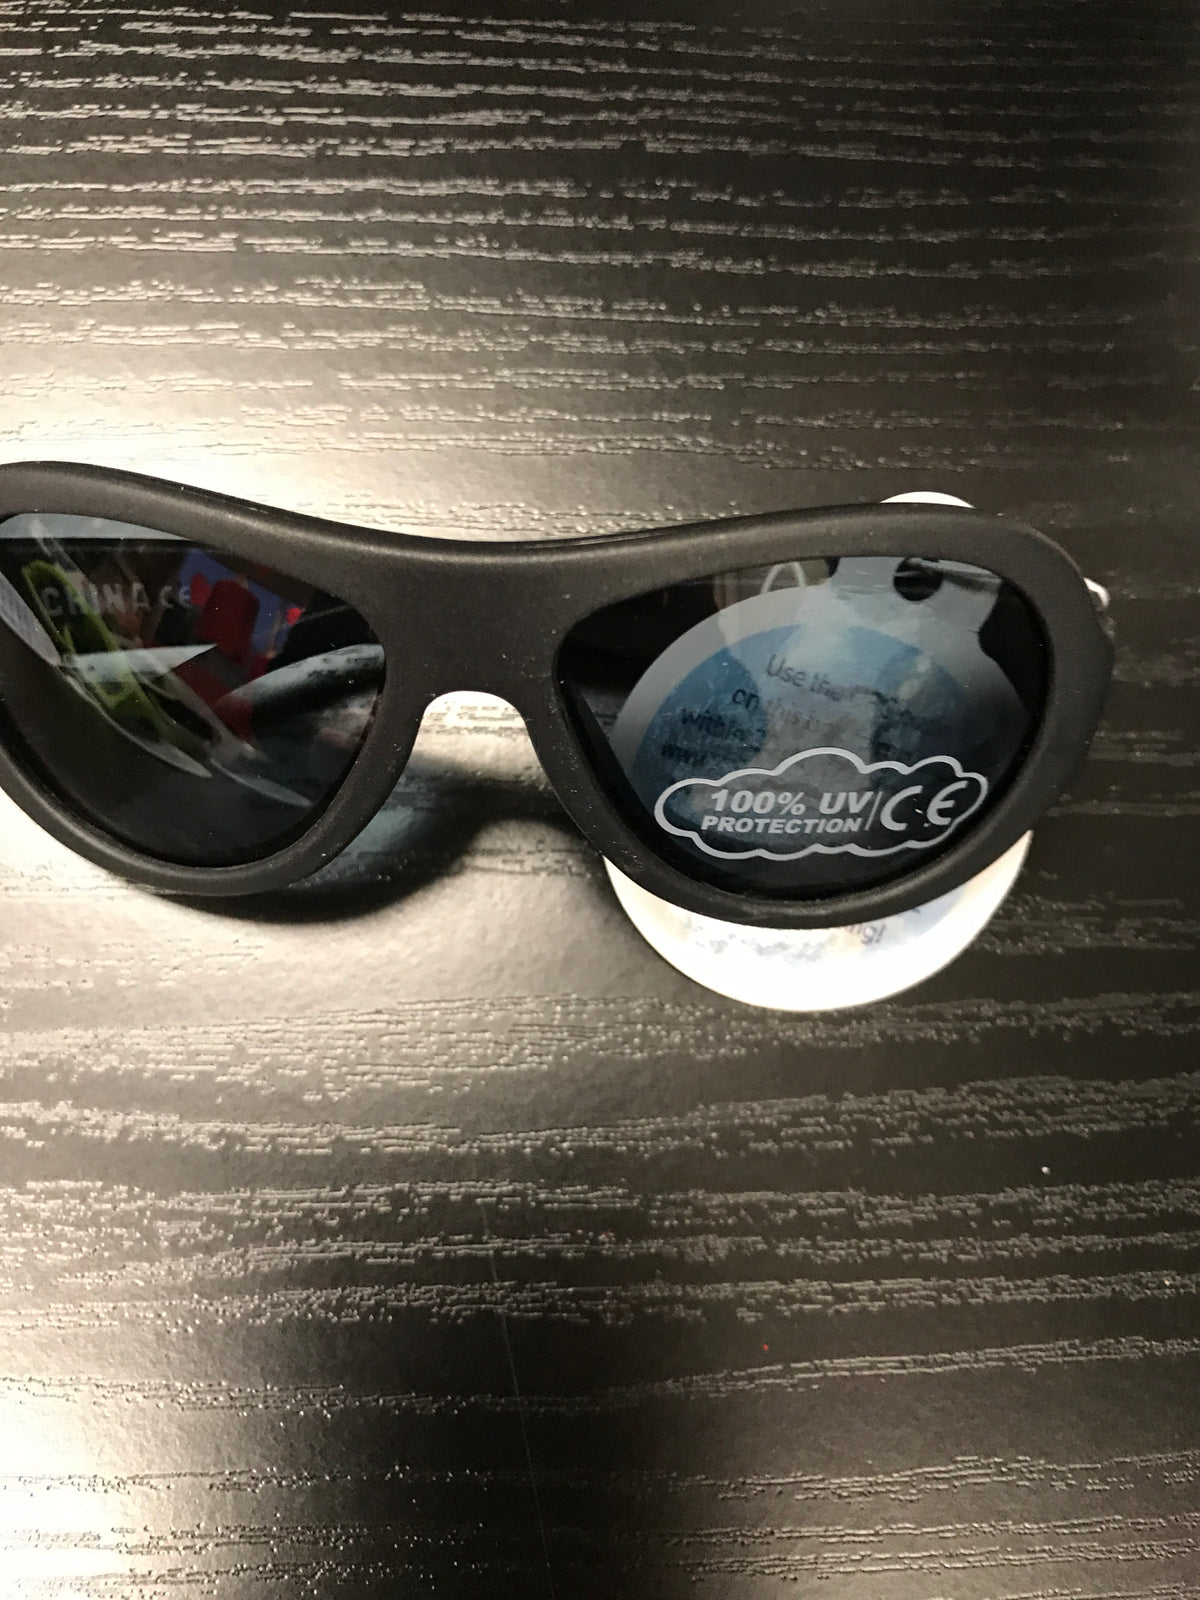 Babiators Aviator Sunglasses -Ages 0-5 - Various Colors*